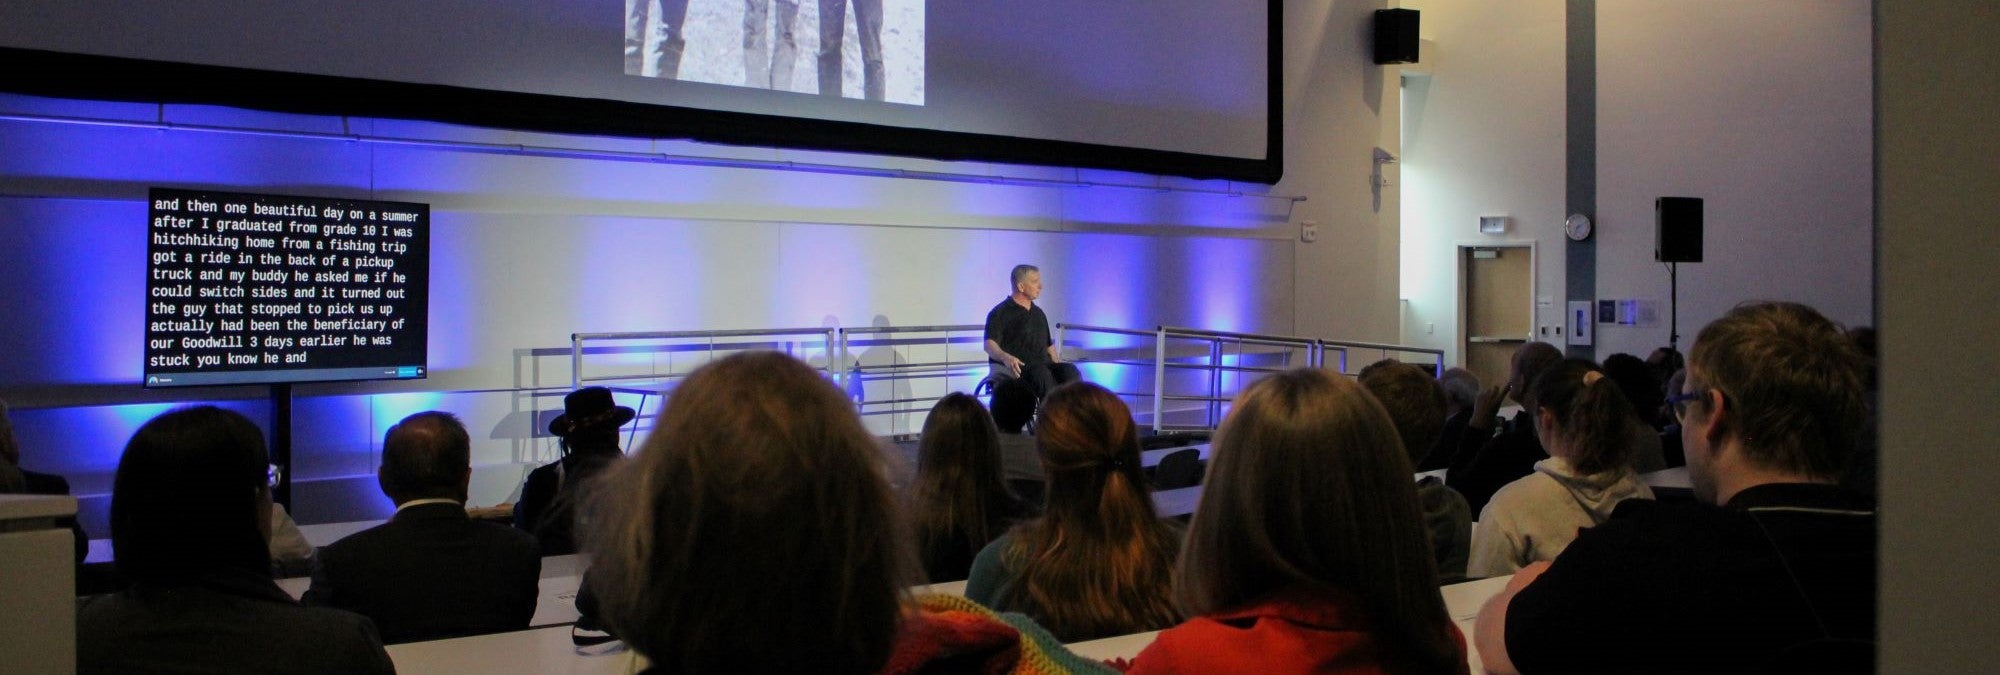 Rick Hansen speaks on stage at the University of Waterloo